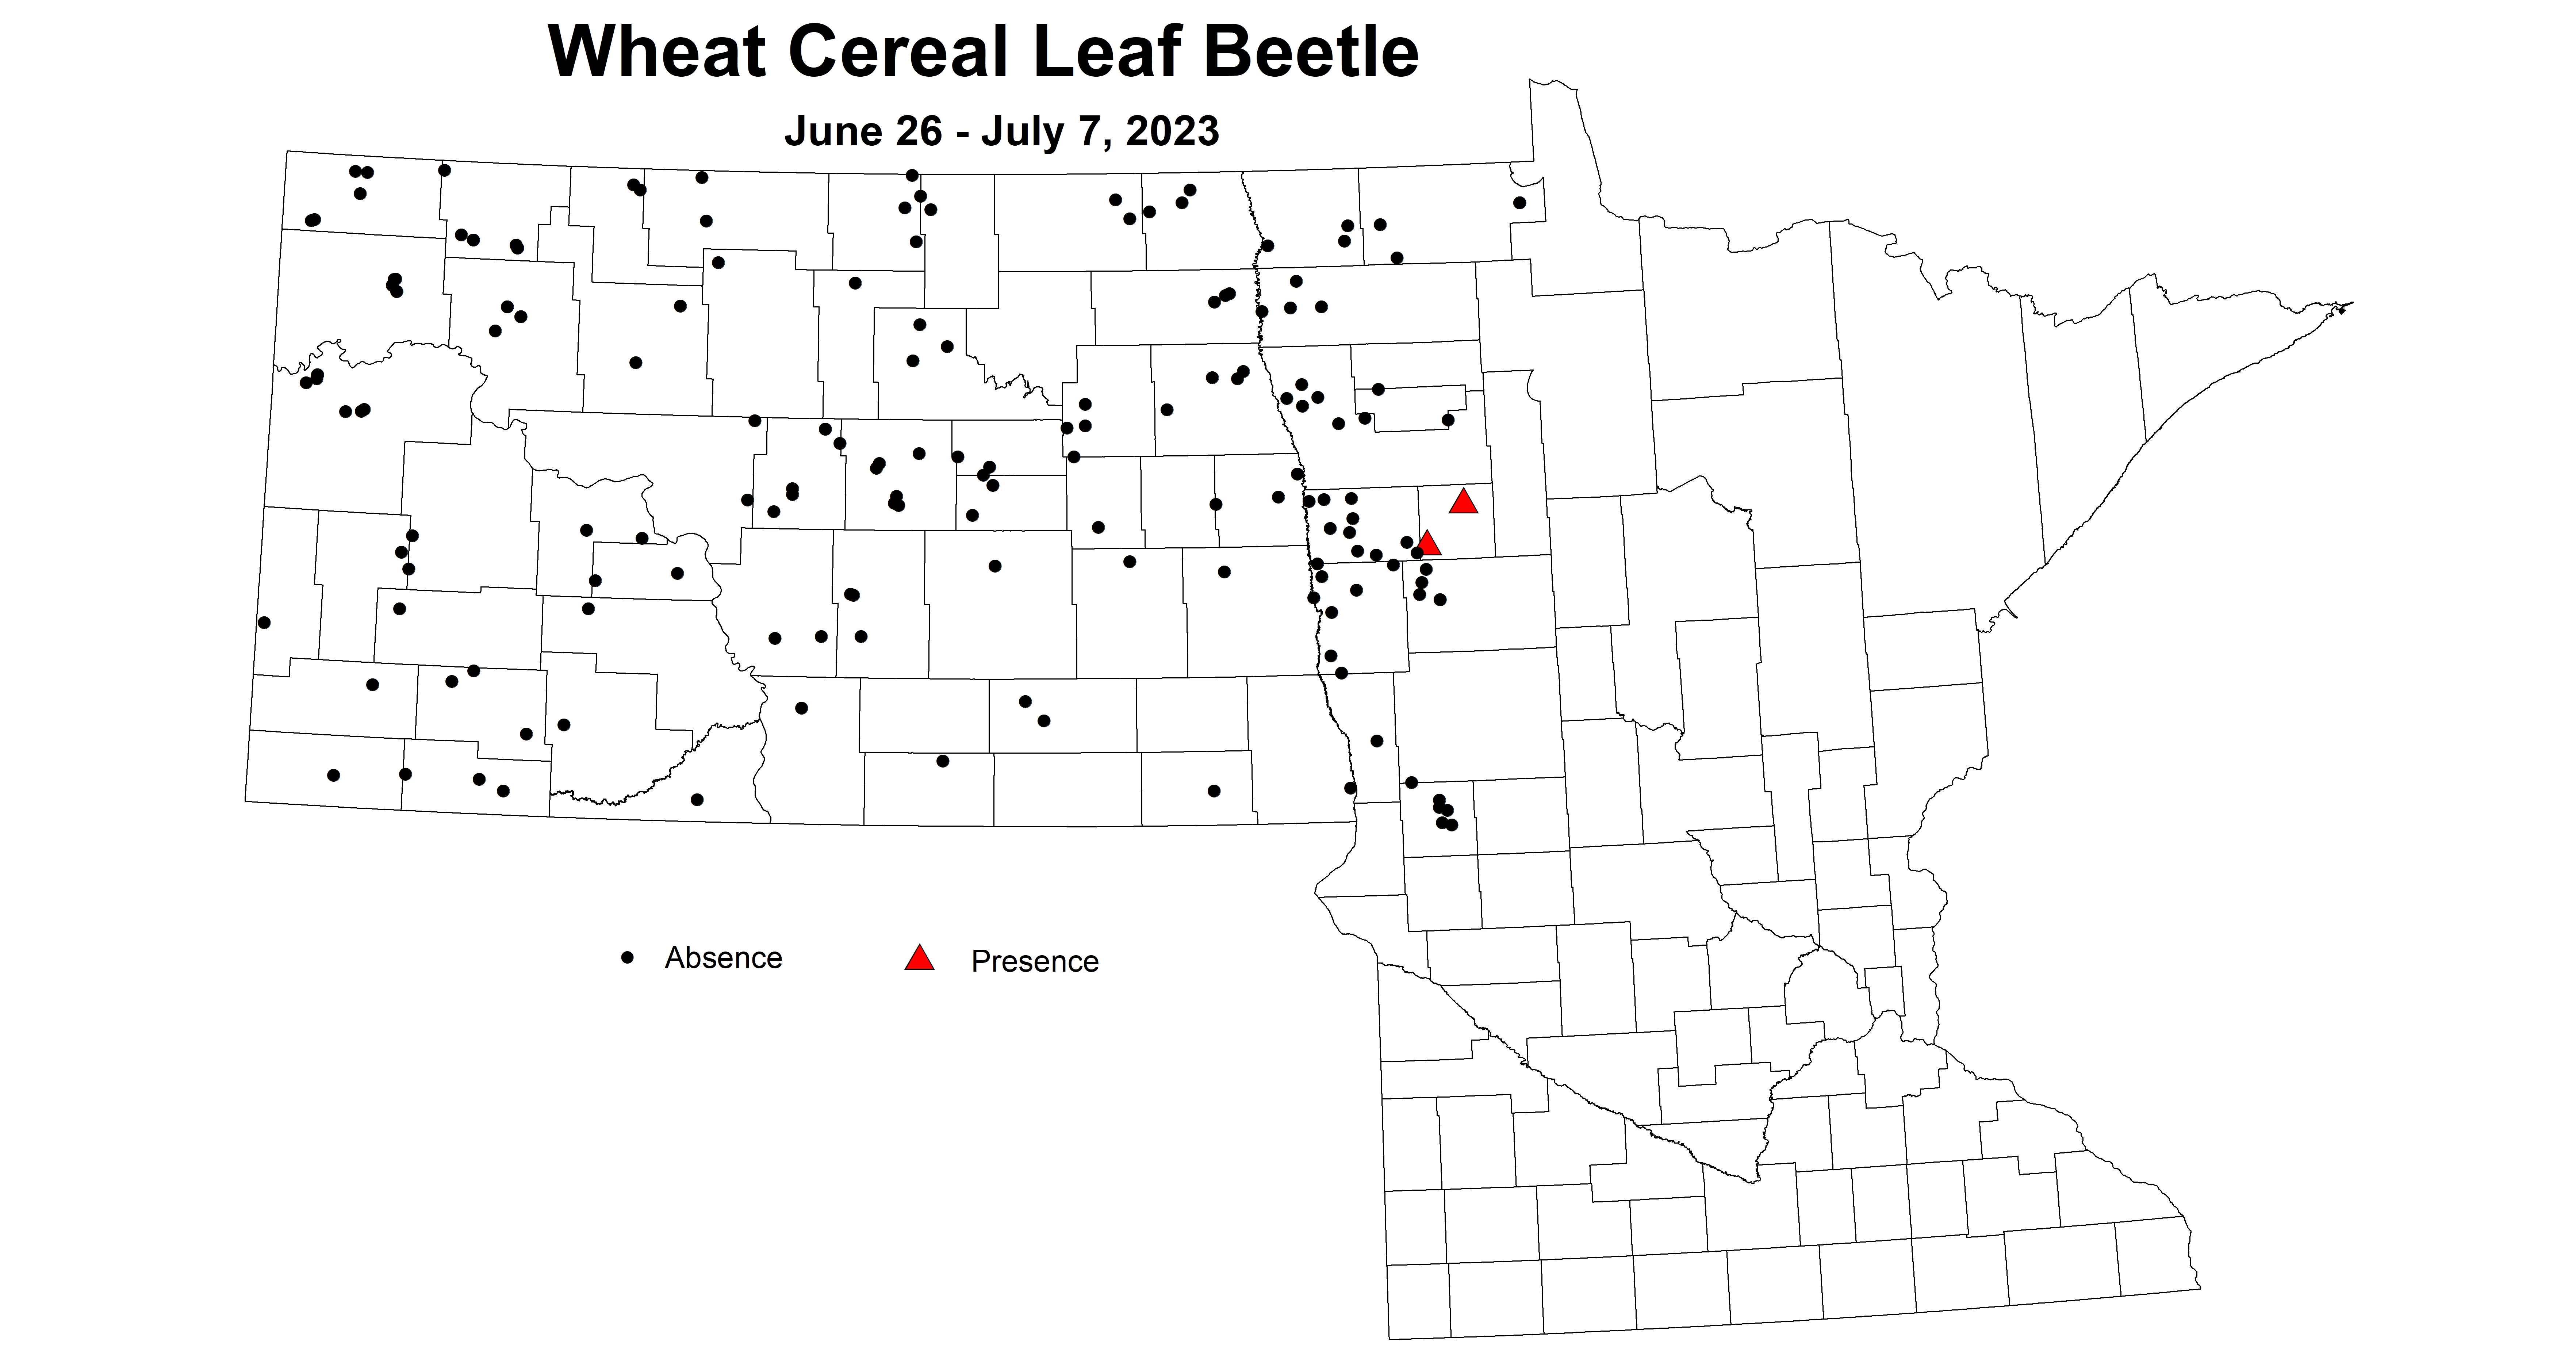 wheat cereal leaf beetle June 26 - July 7 2023